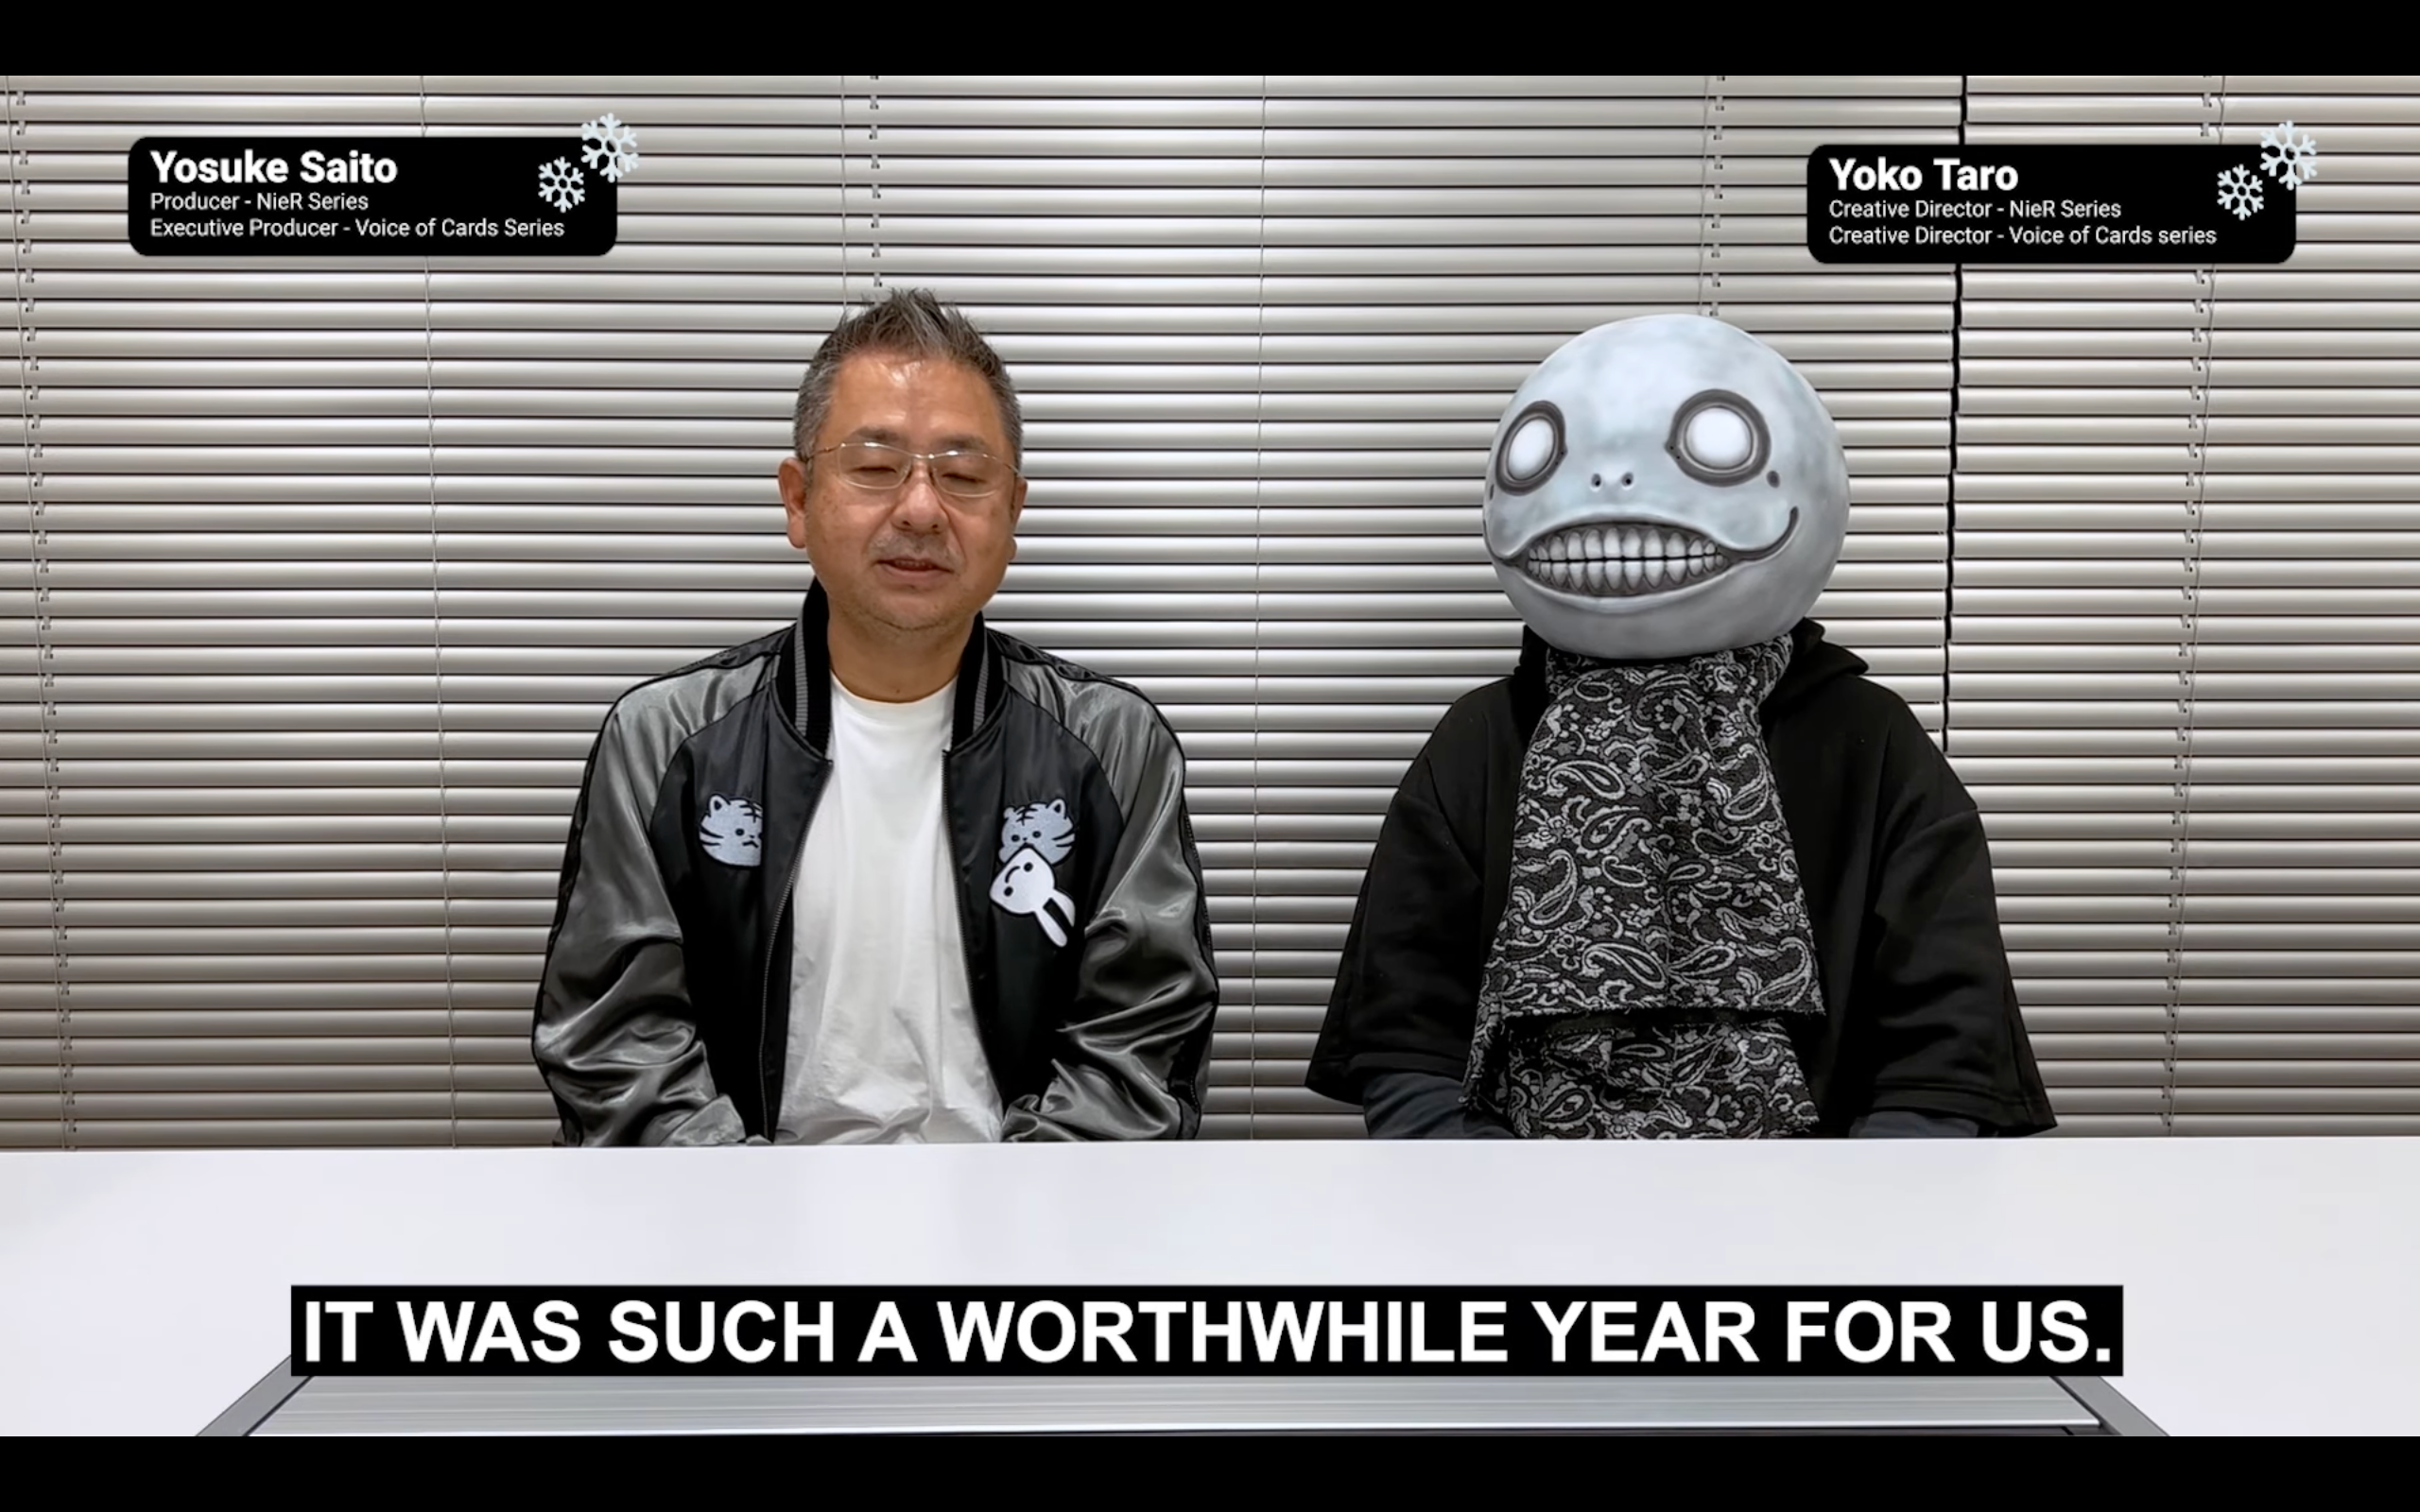 El video Joyful Latest 12 months de Square Enix presenta a Naoki Yoshida, Yoko Taro